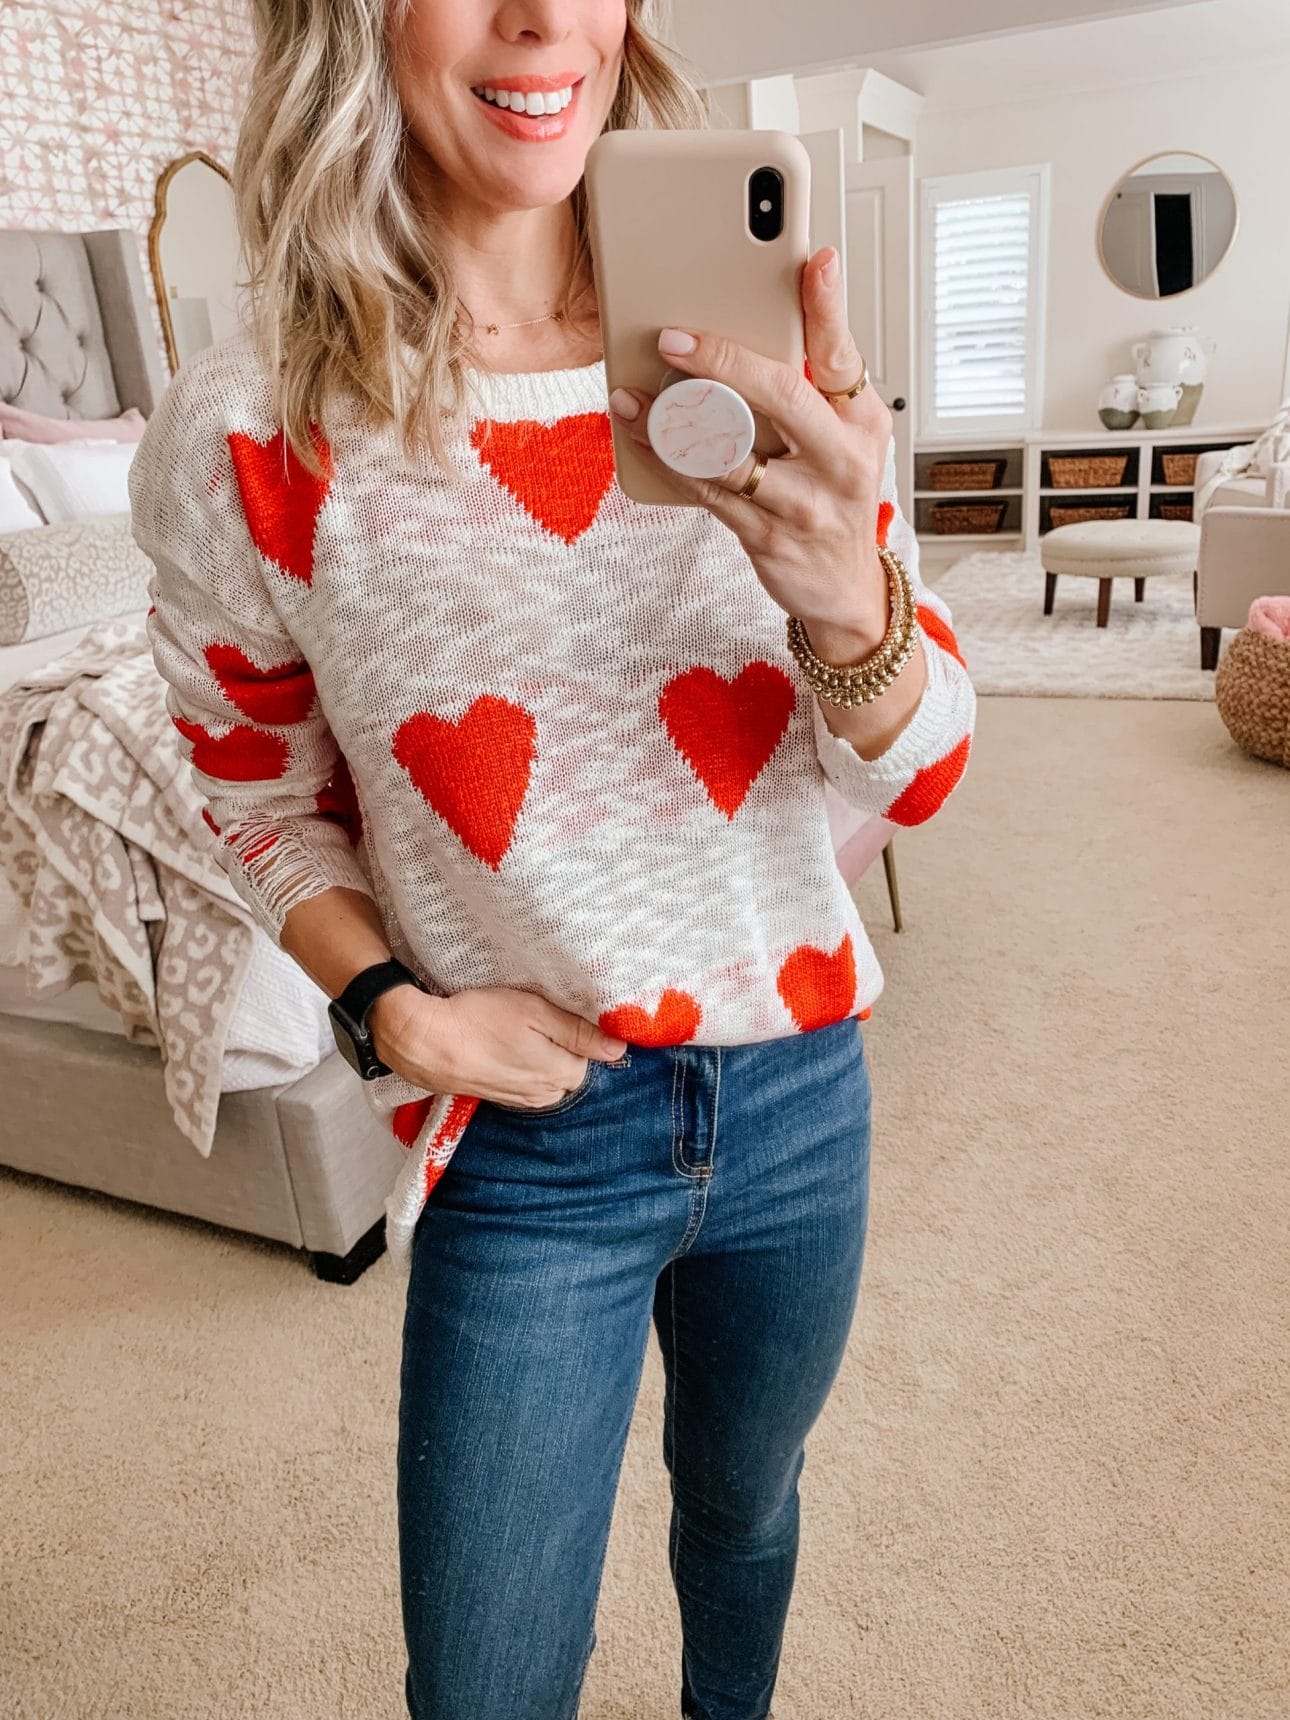 Amazon Fashion, Heart Sweater, Jeans 